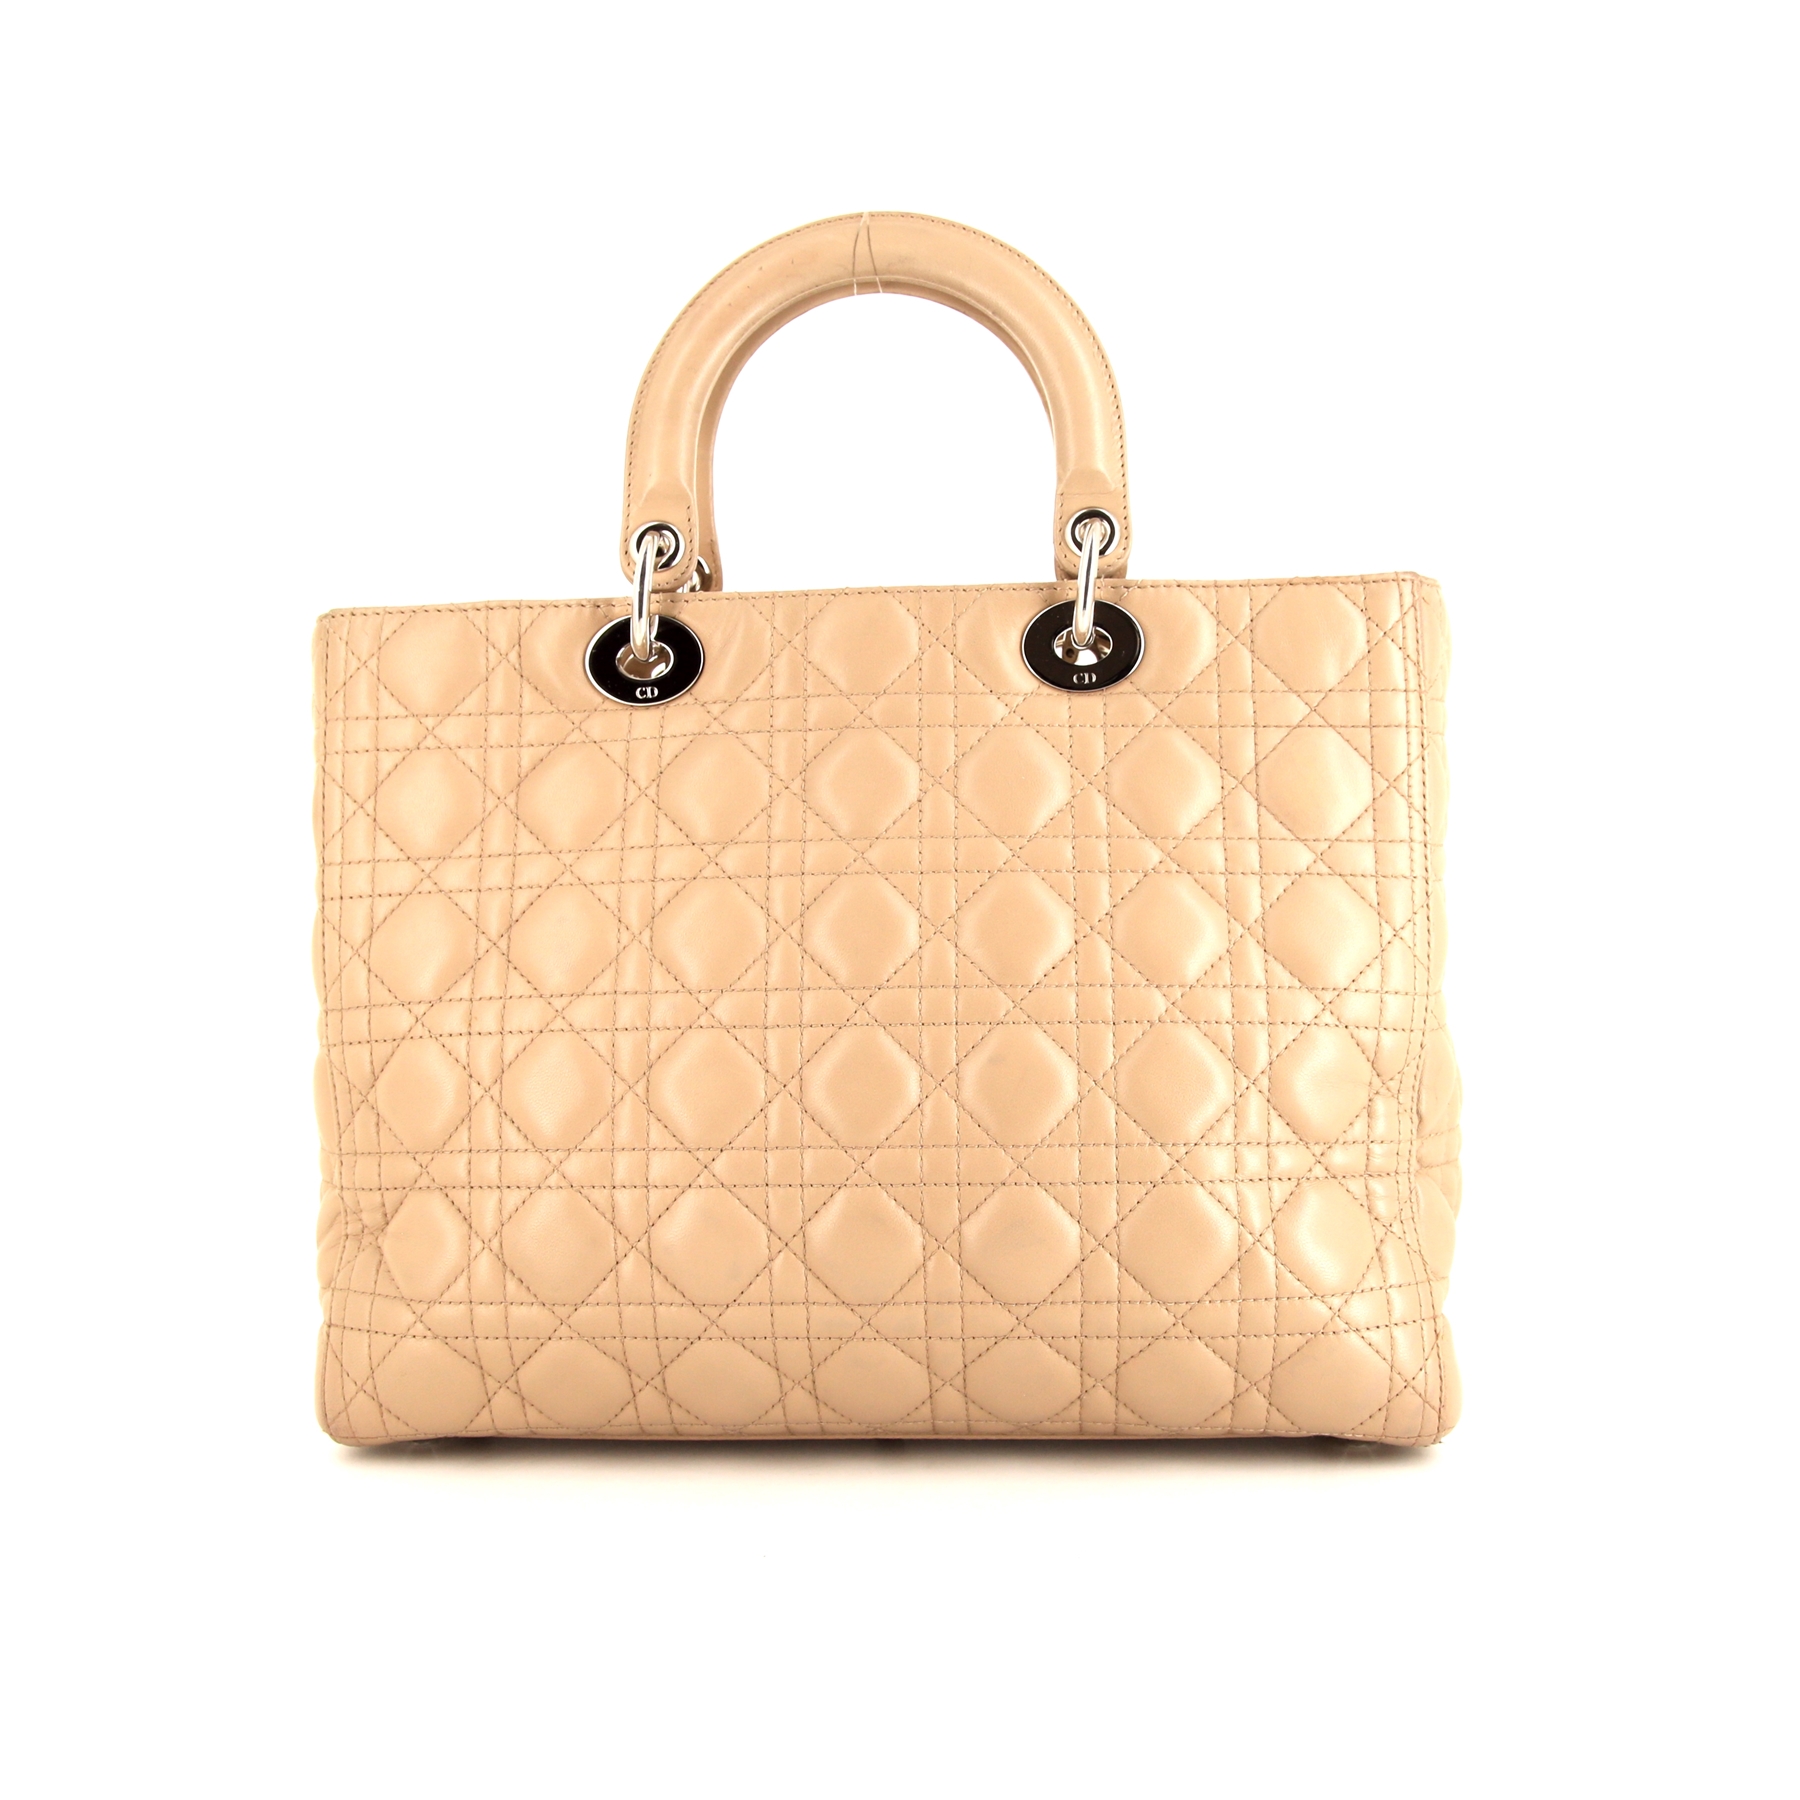 Lady Dior Large Model Handbag In Beige Leather Cannage